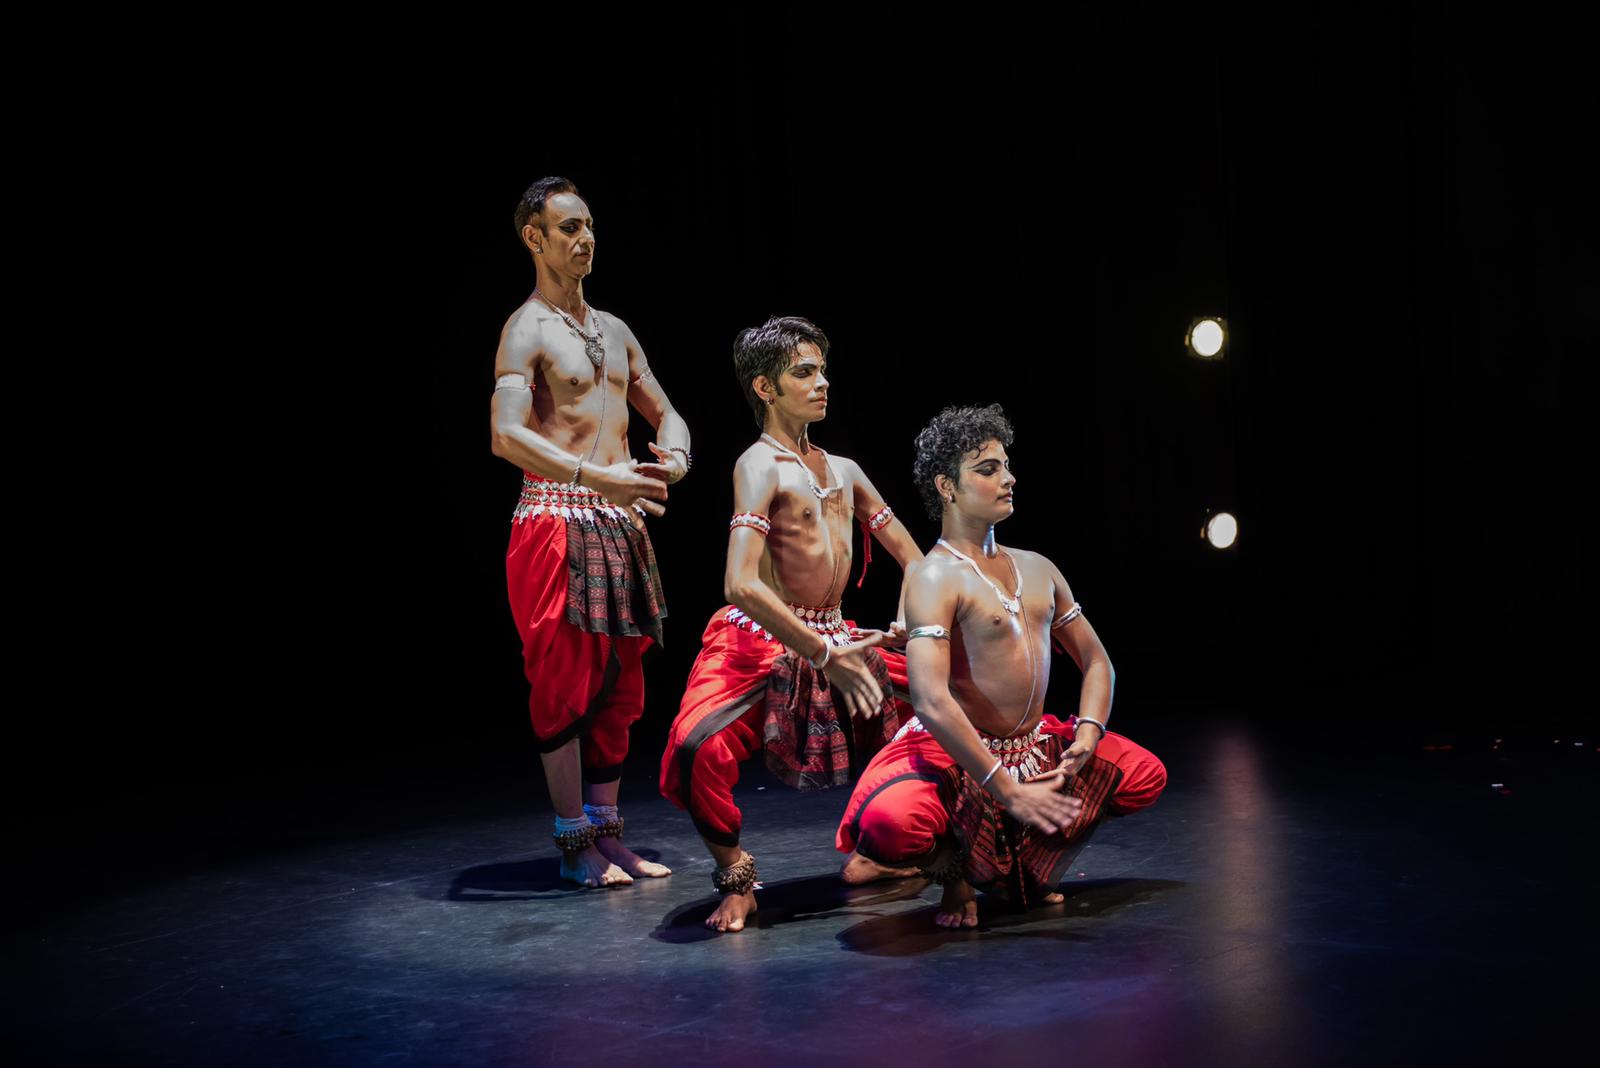 Australian Indian Odissi dancer Sam Goraya with guest artists from India Samir Panigrahi (L) and Santosh Ram (R) in performance 